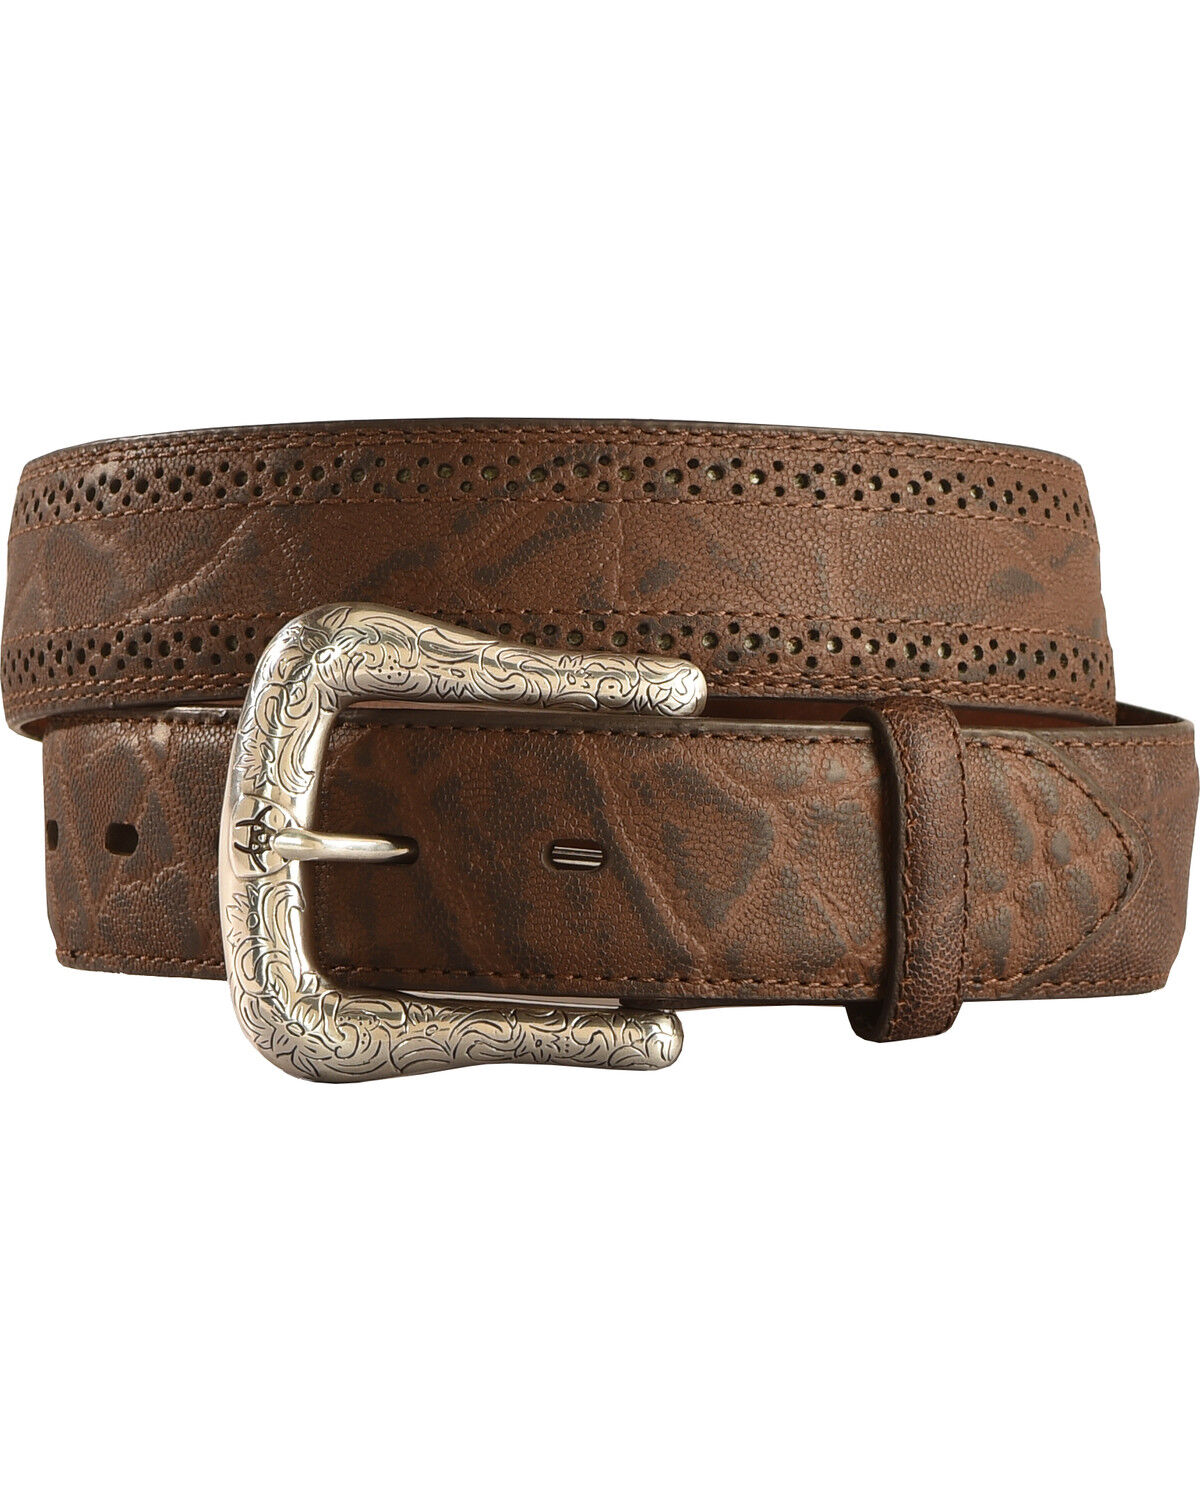 Ariat Men's Distressed Tan Leather Belt A1011202 